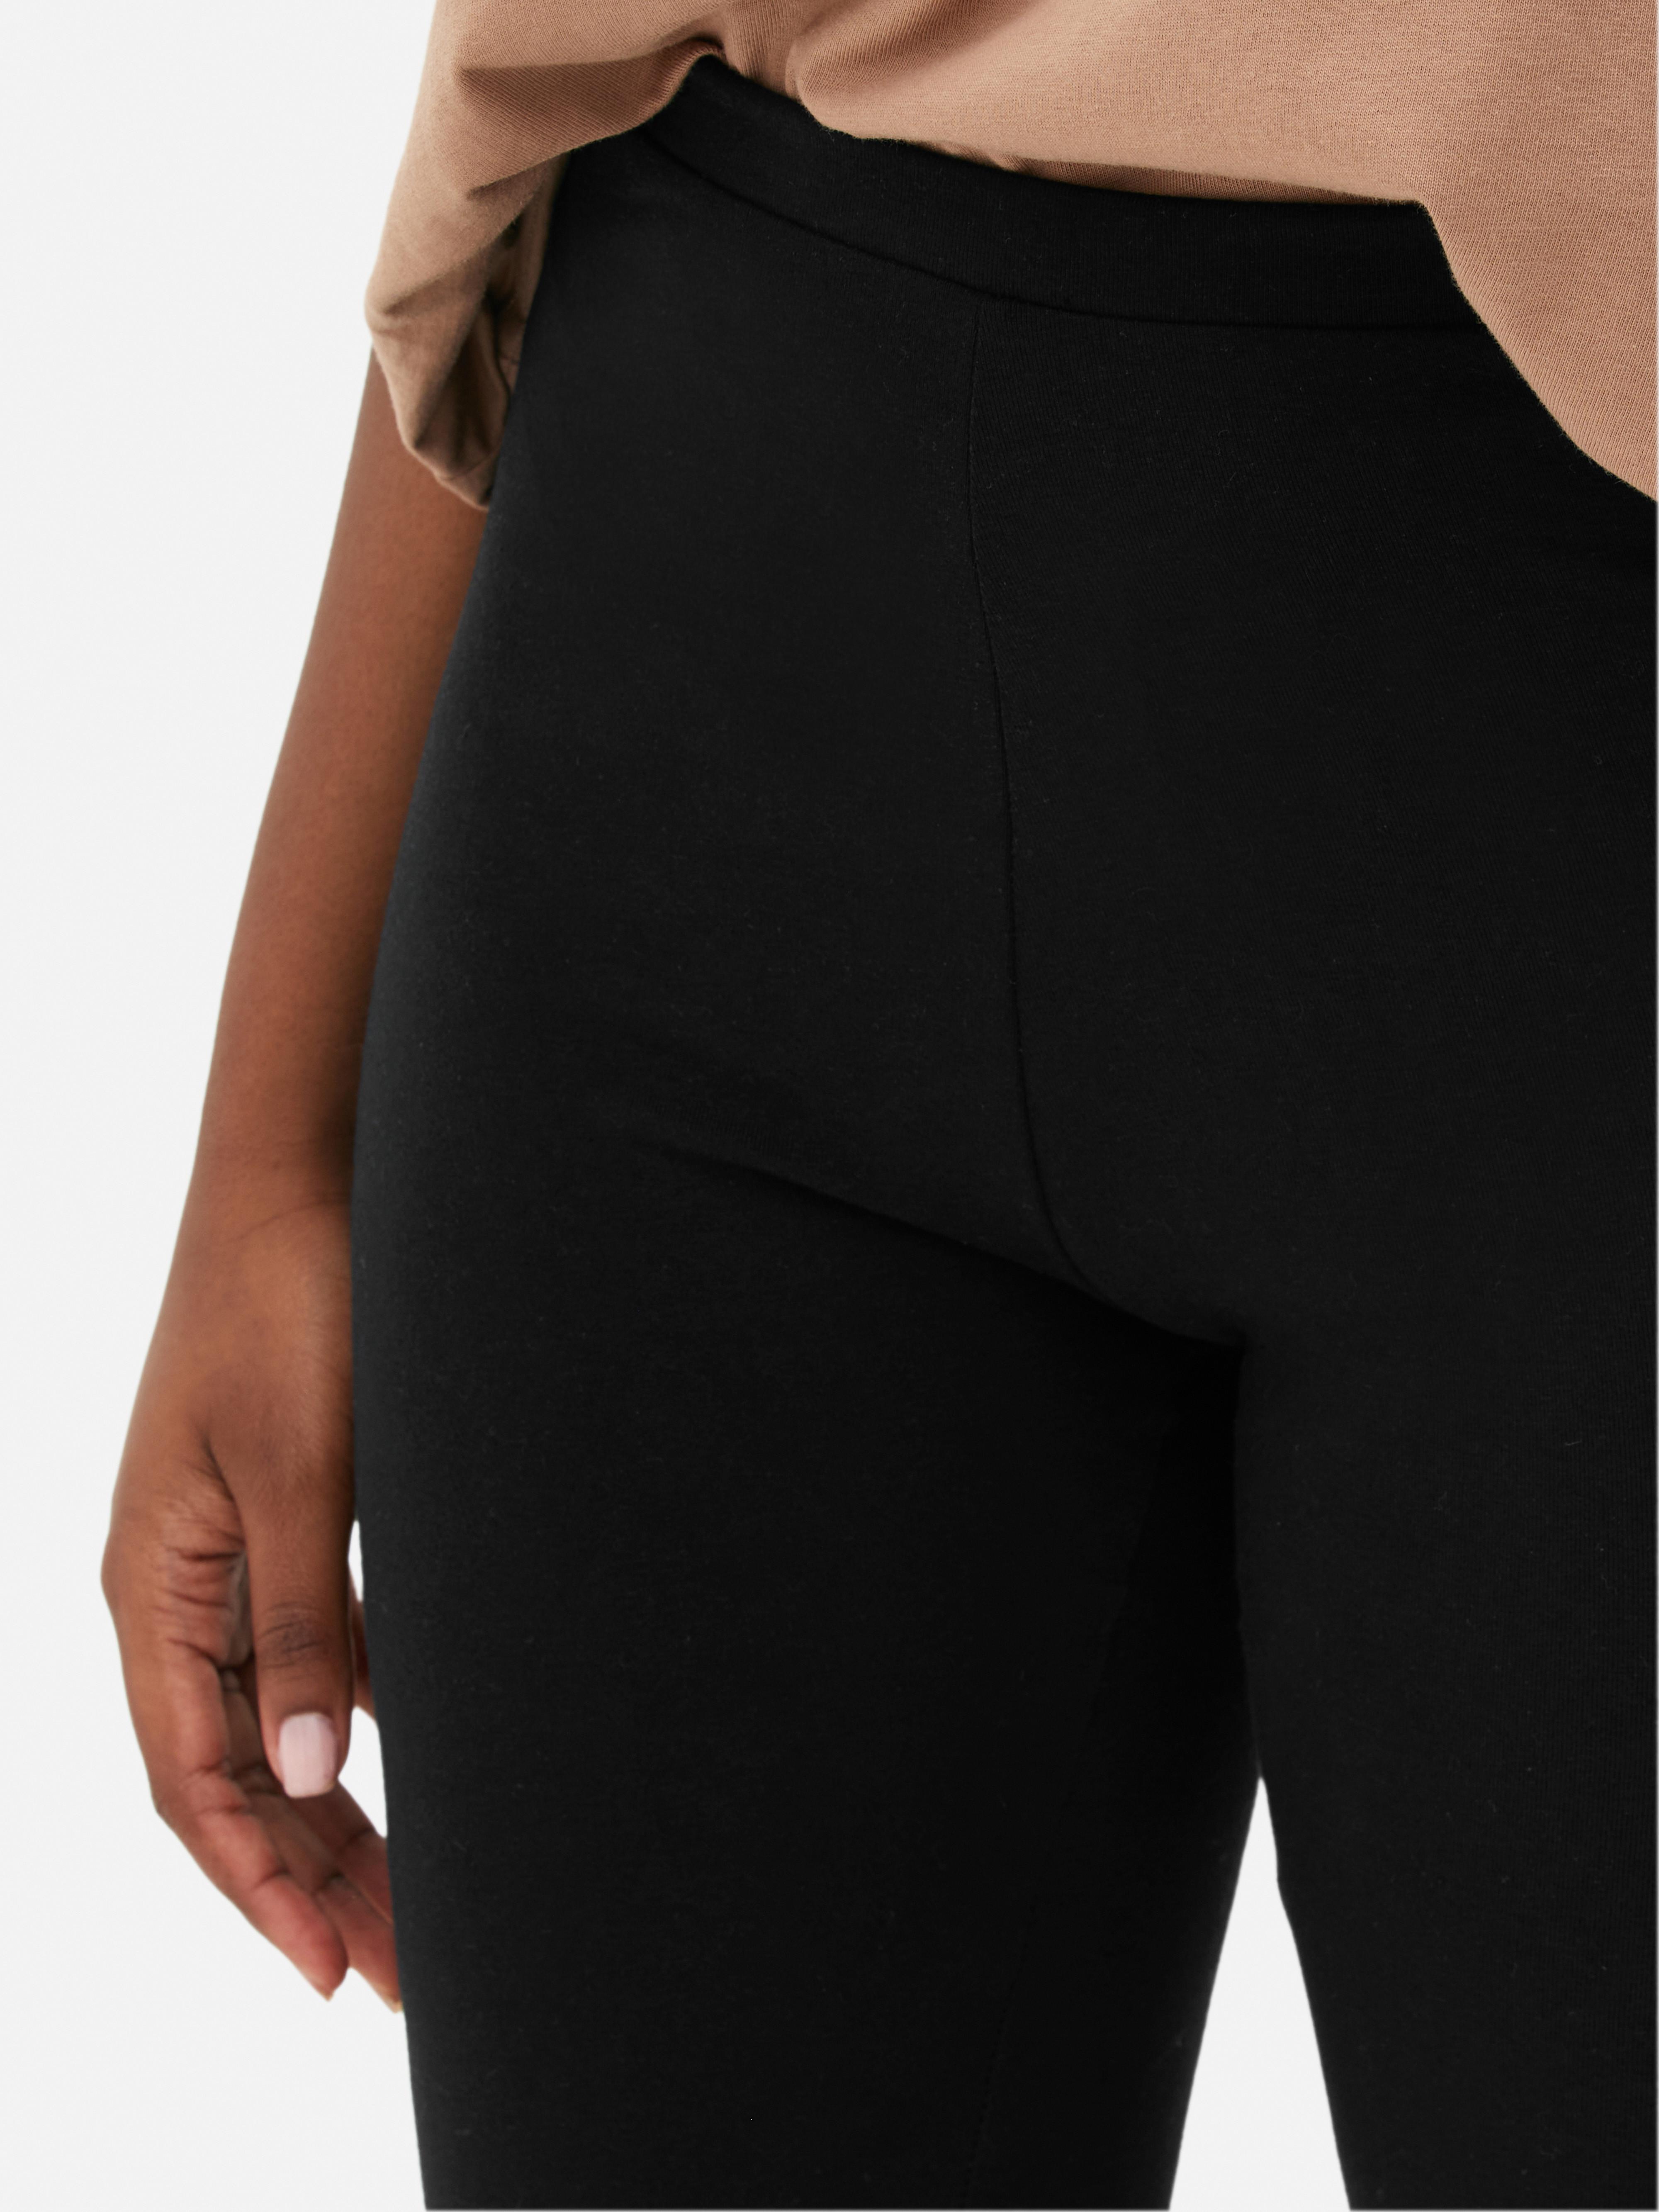 PRIMARK Women's Black Cotton Leggings - Casual Pants - Size XL - NEW